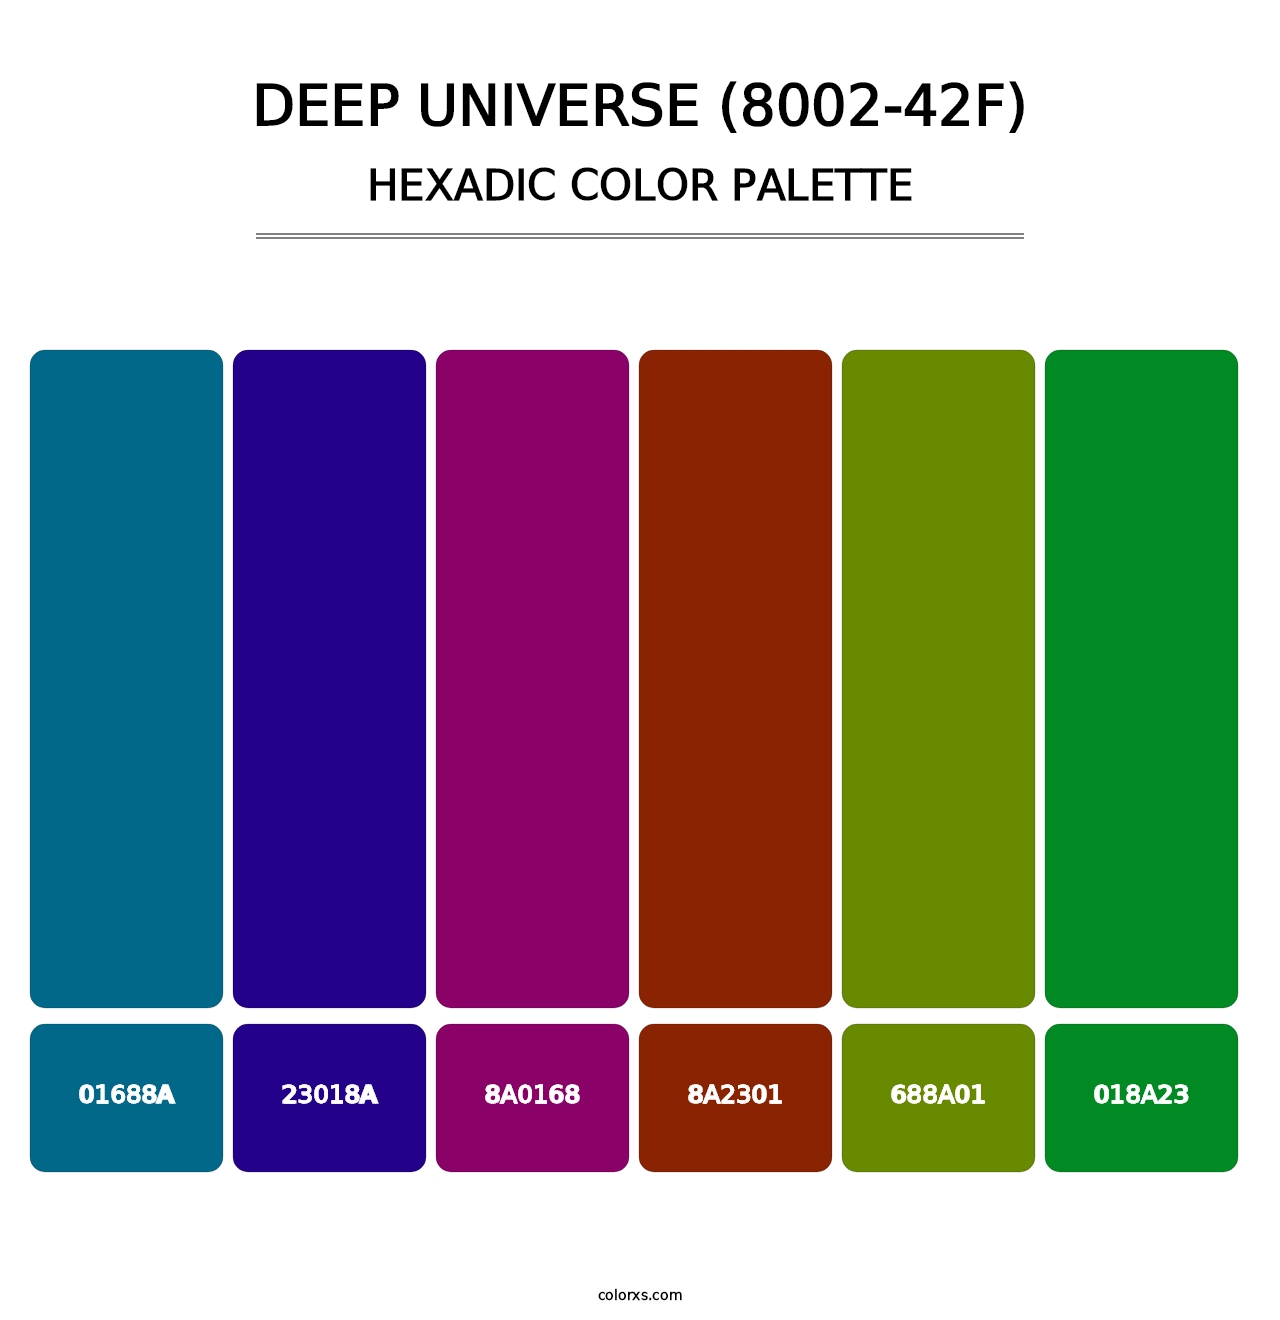 Deep Universe (8002-42F) - Hexadic Color Palette